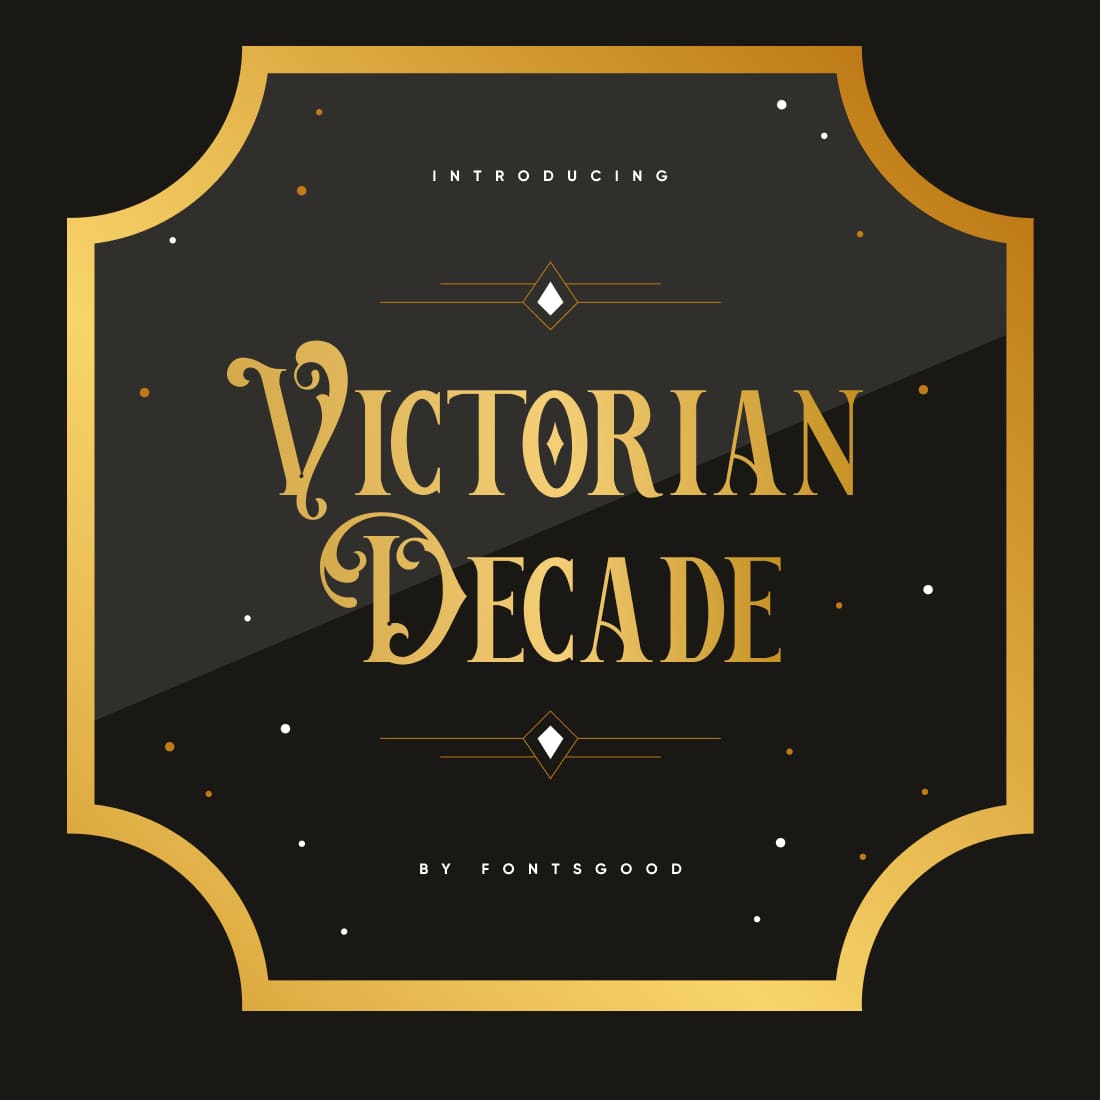 Victorian Decade Free Font Main MasterBundles Cover.